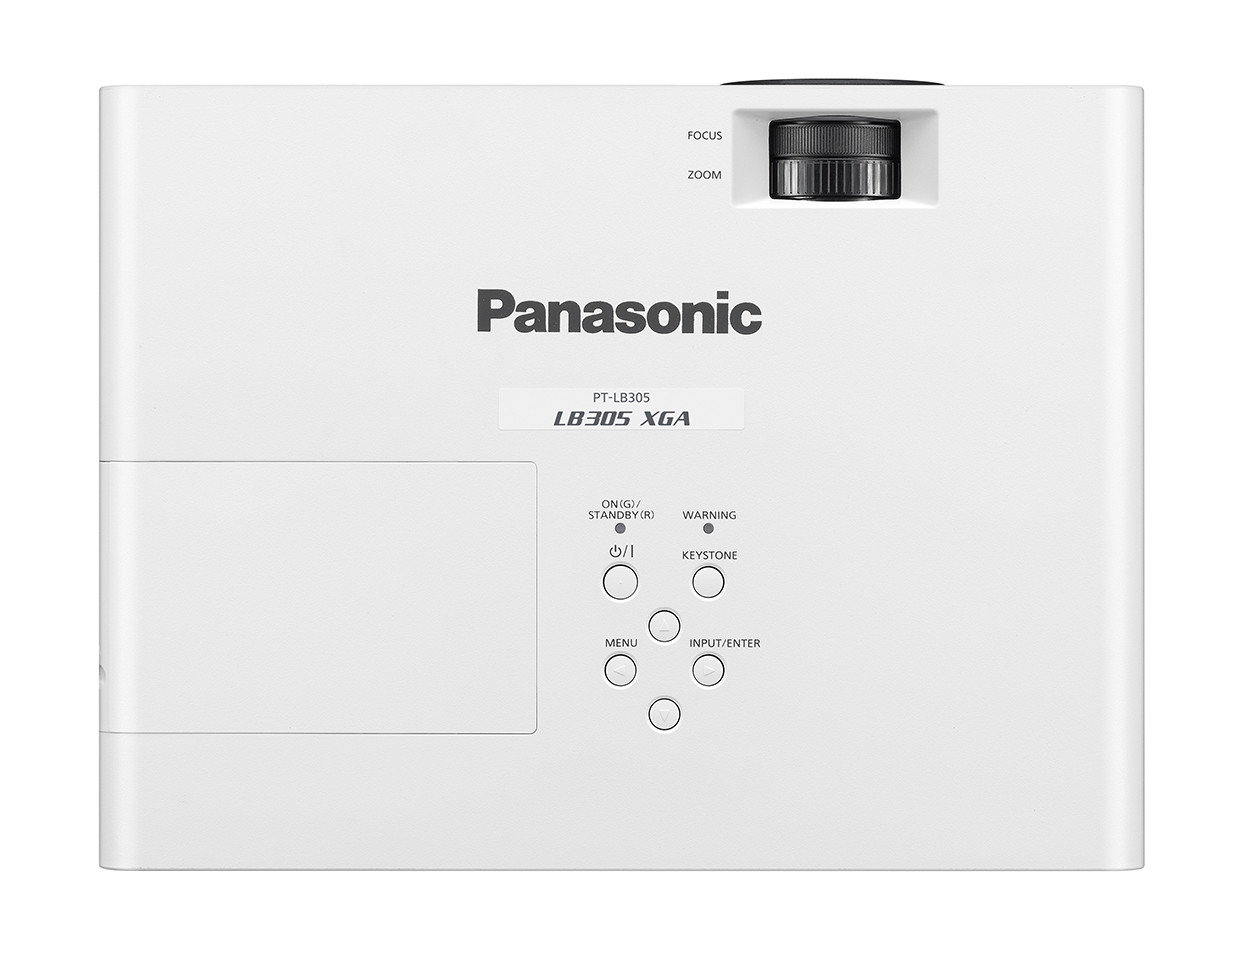 Panasonic-PT-LB305